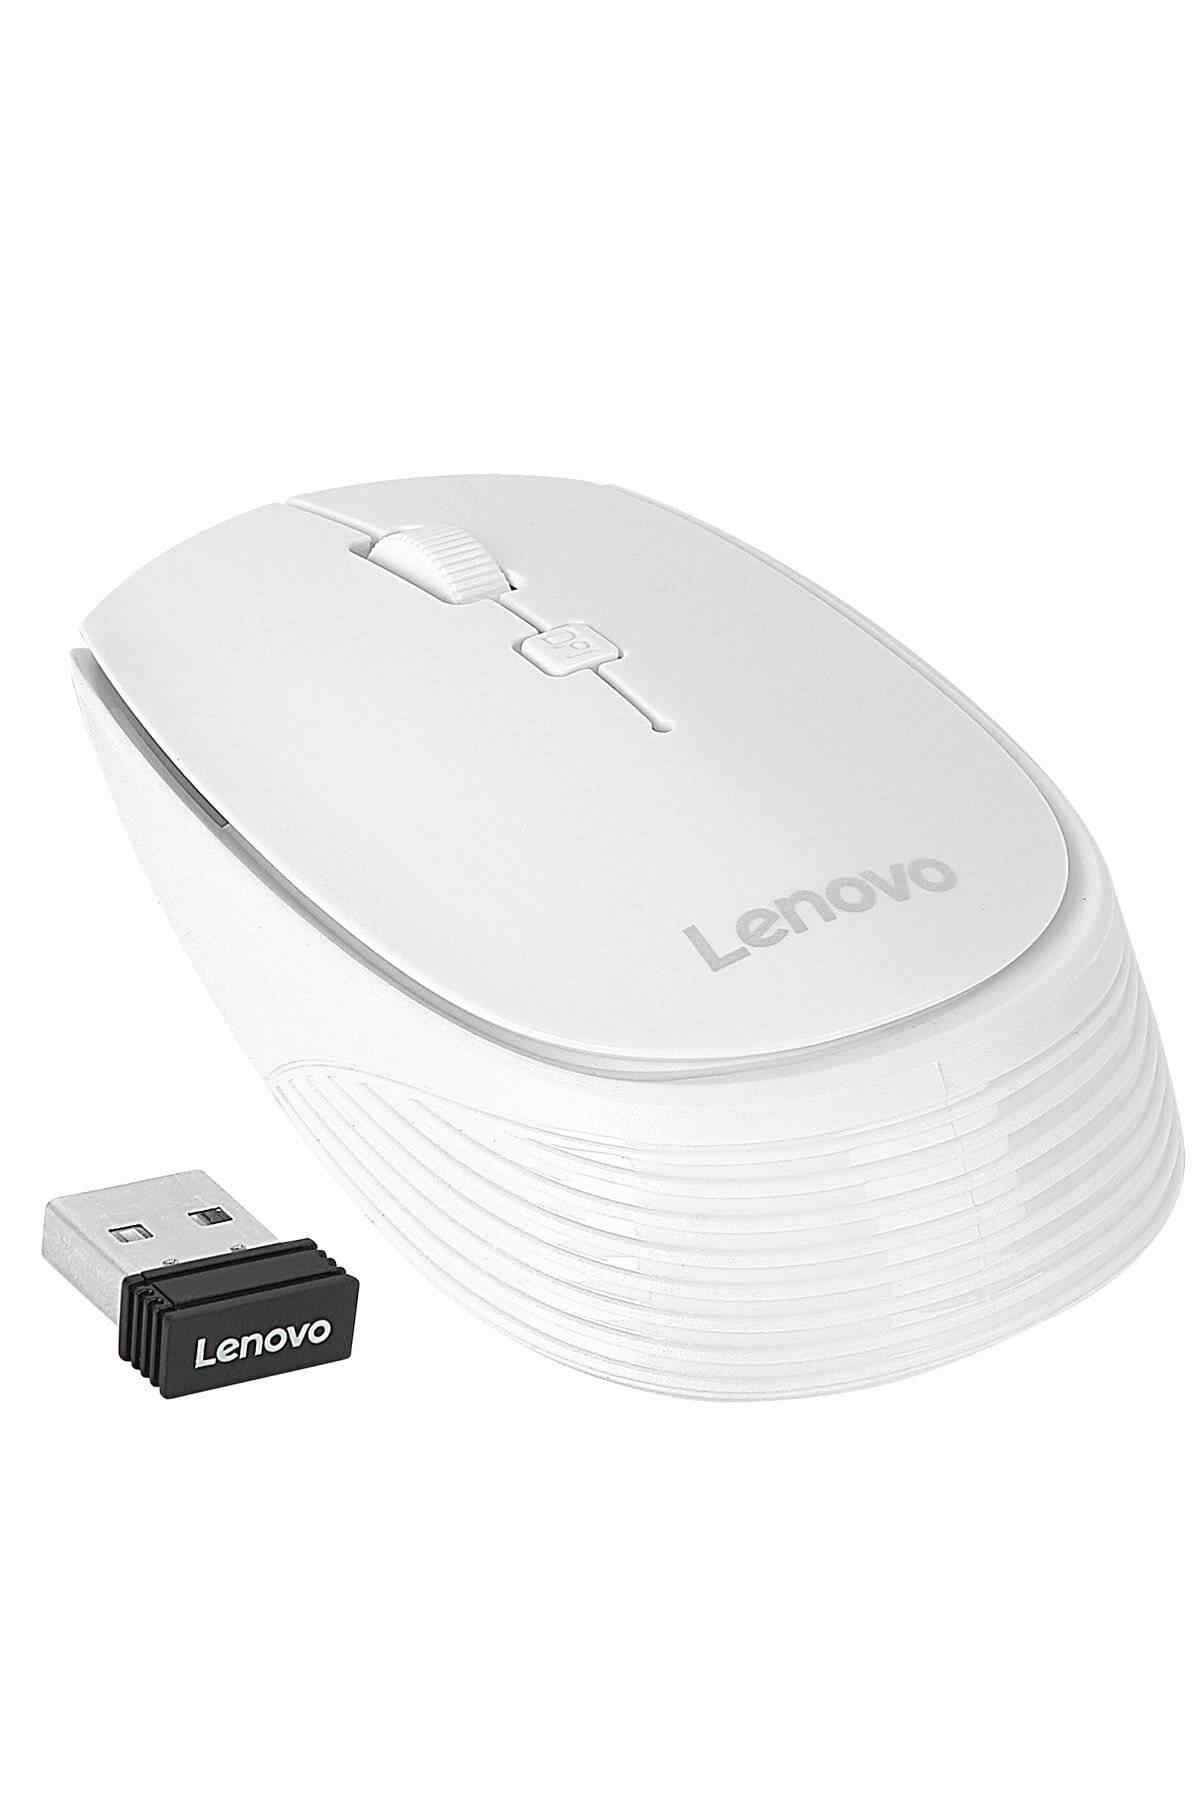 Lenovo M202 1600Dpı Konfort Wireless Kablosuz Mouse -Beyaz